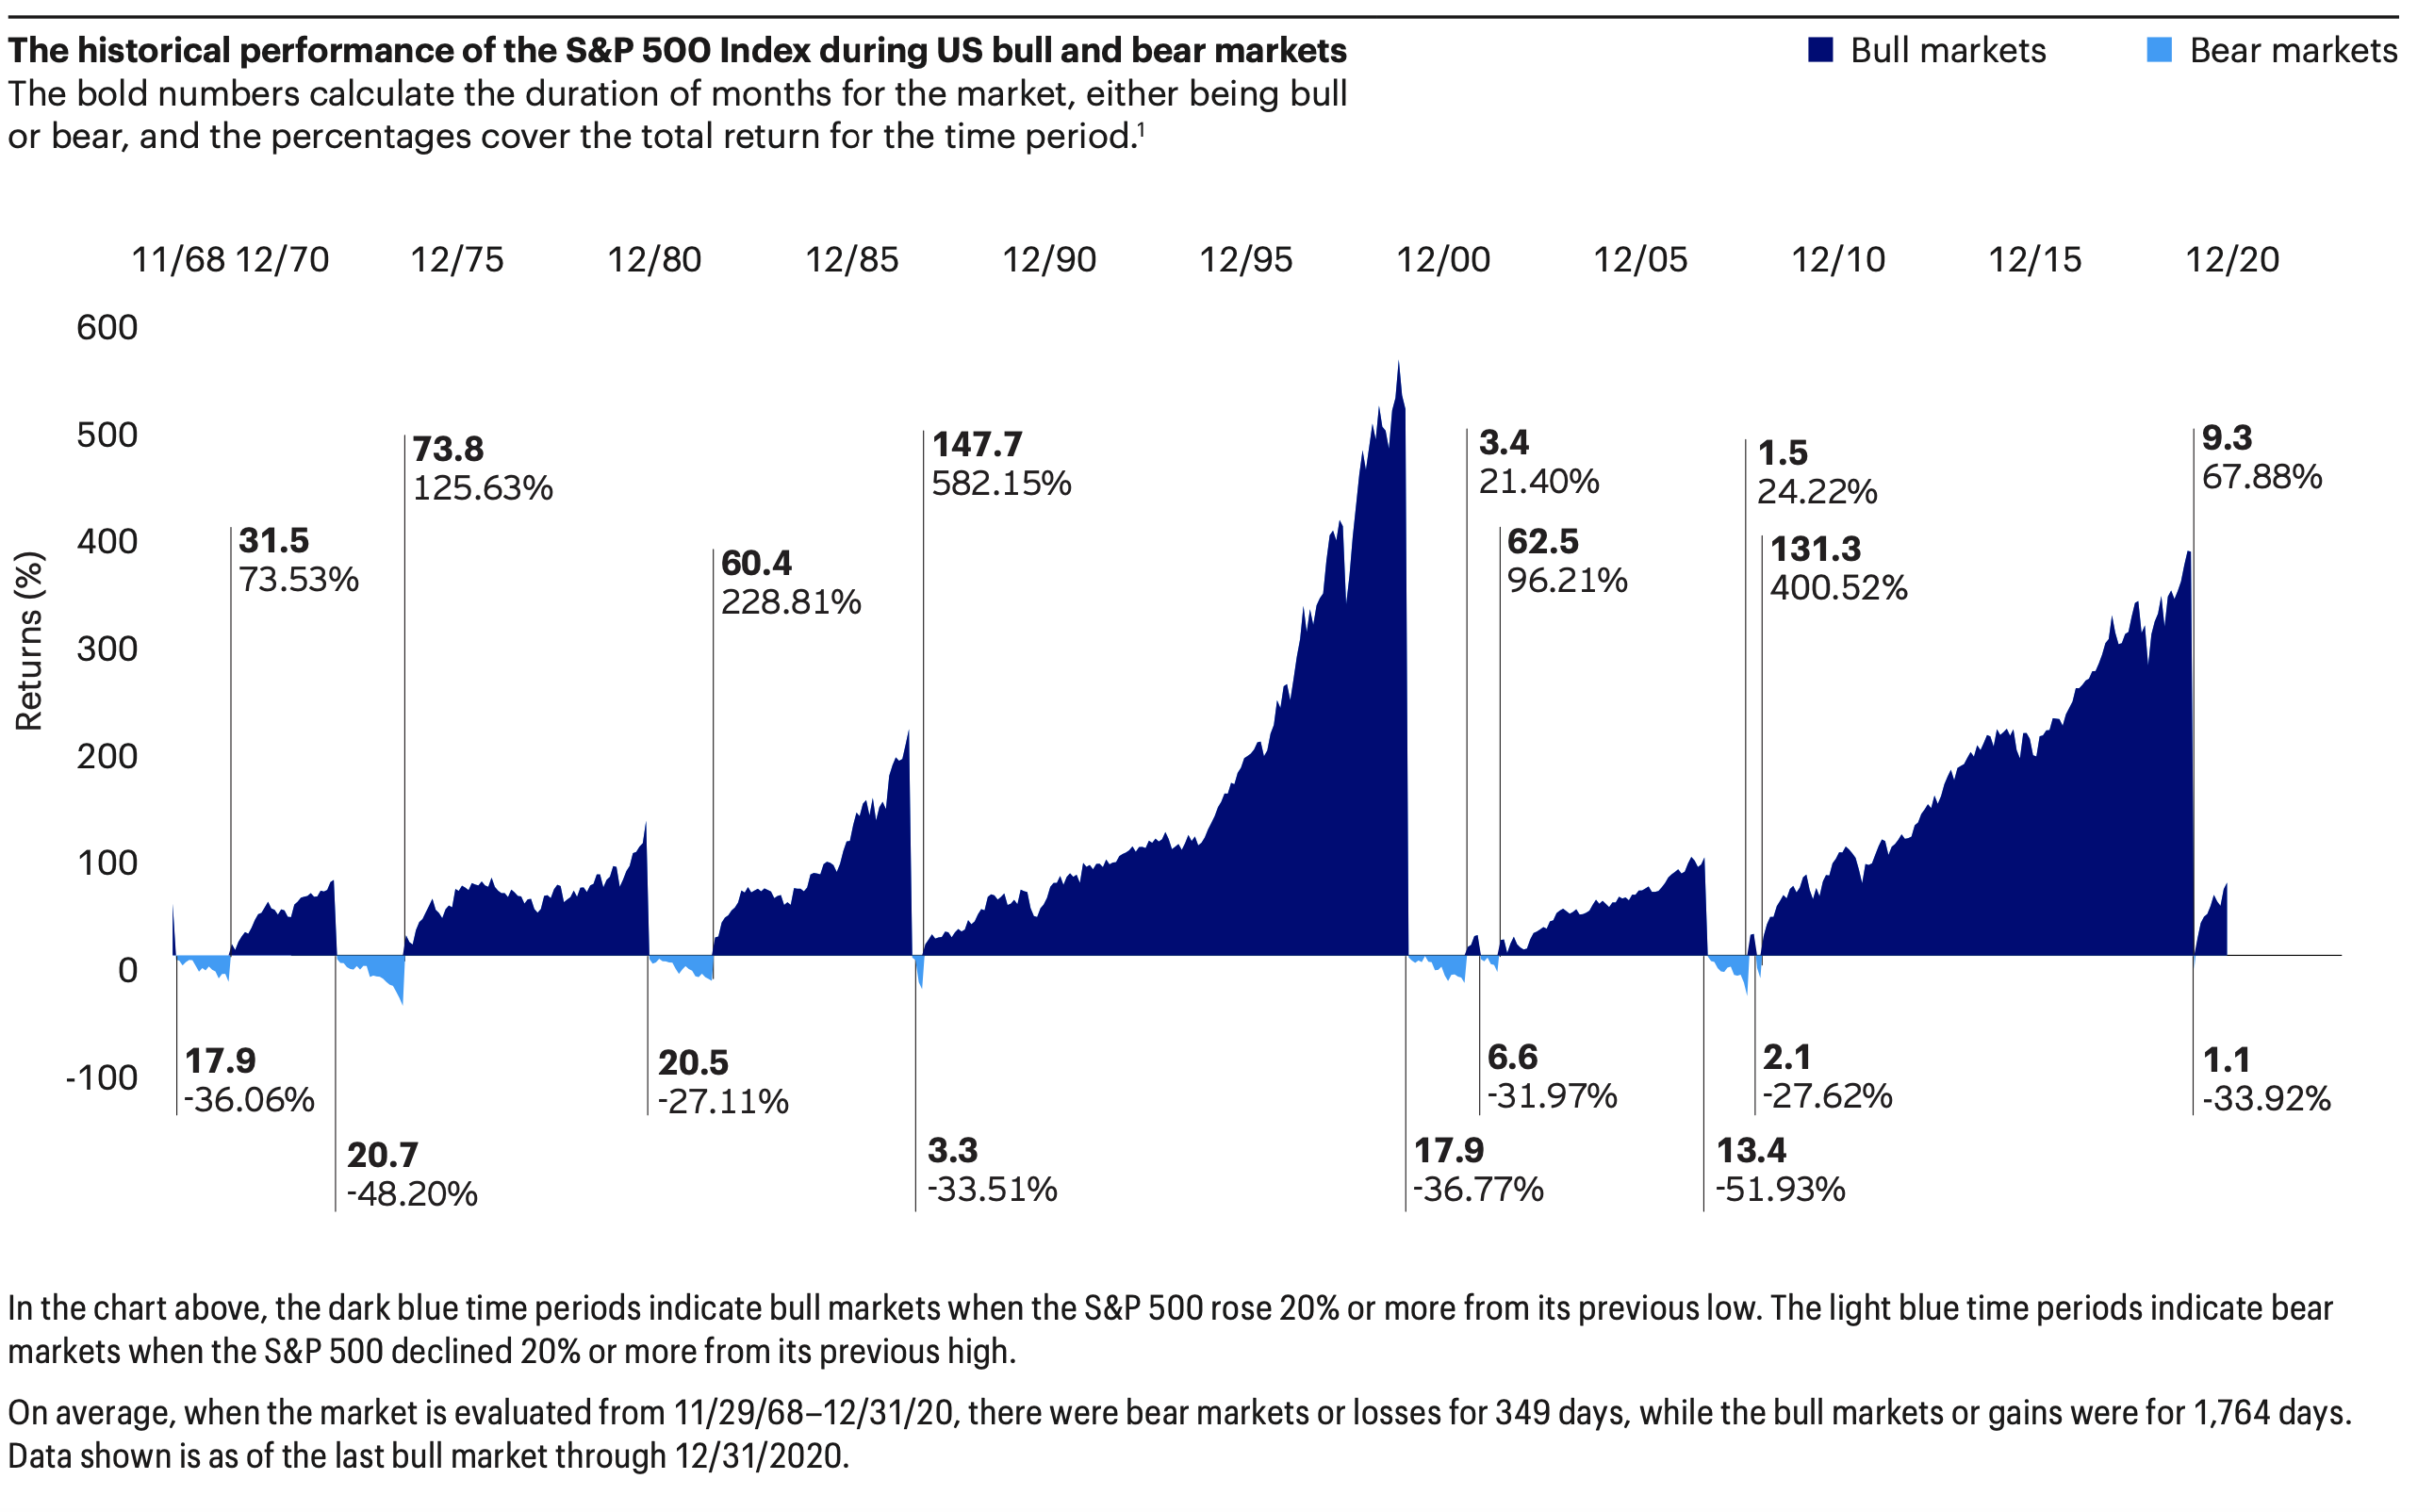 Bull markets last longer than bear markets